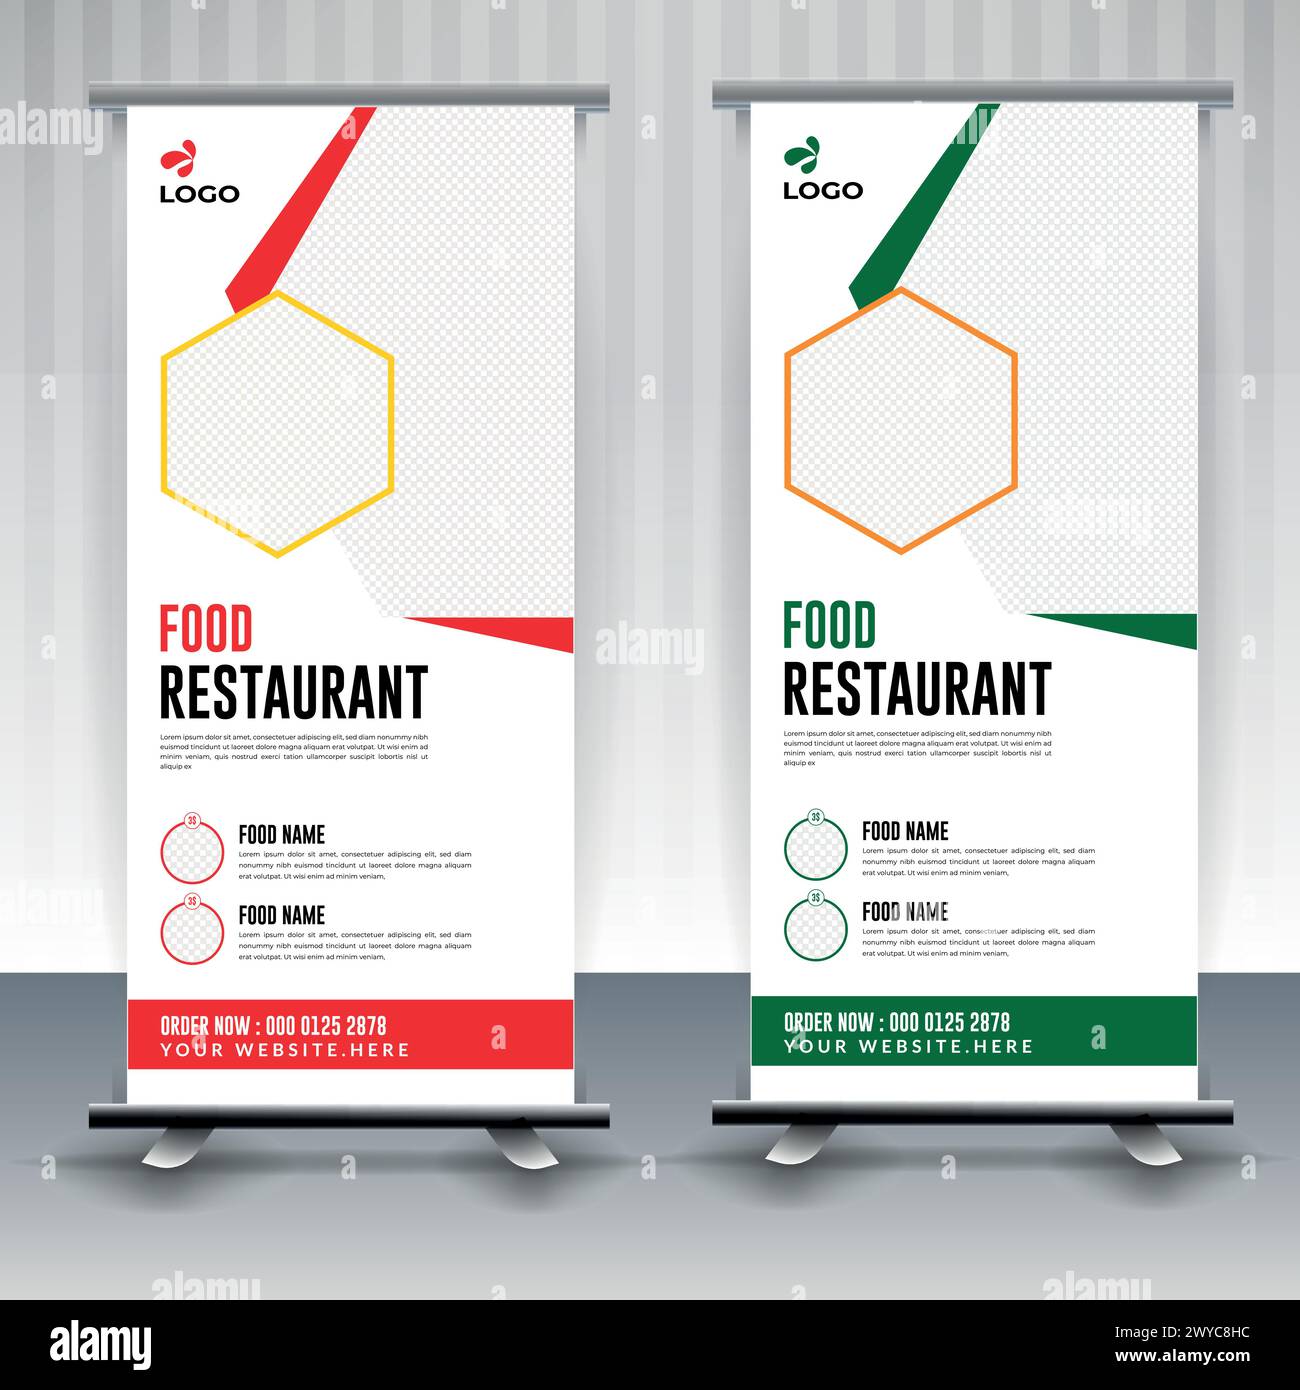 Food menu and restaurant Modern food rollup banner design. Stock Vector